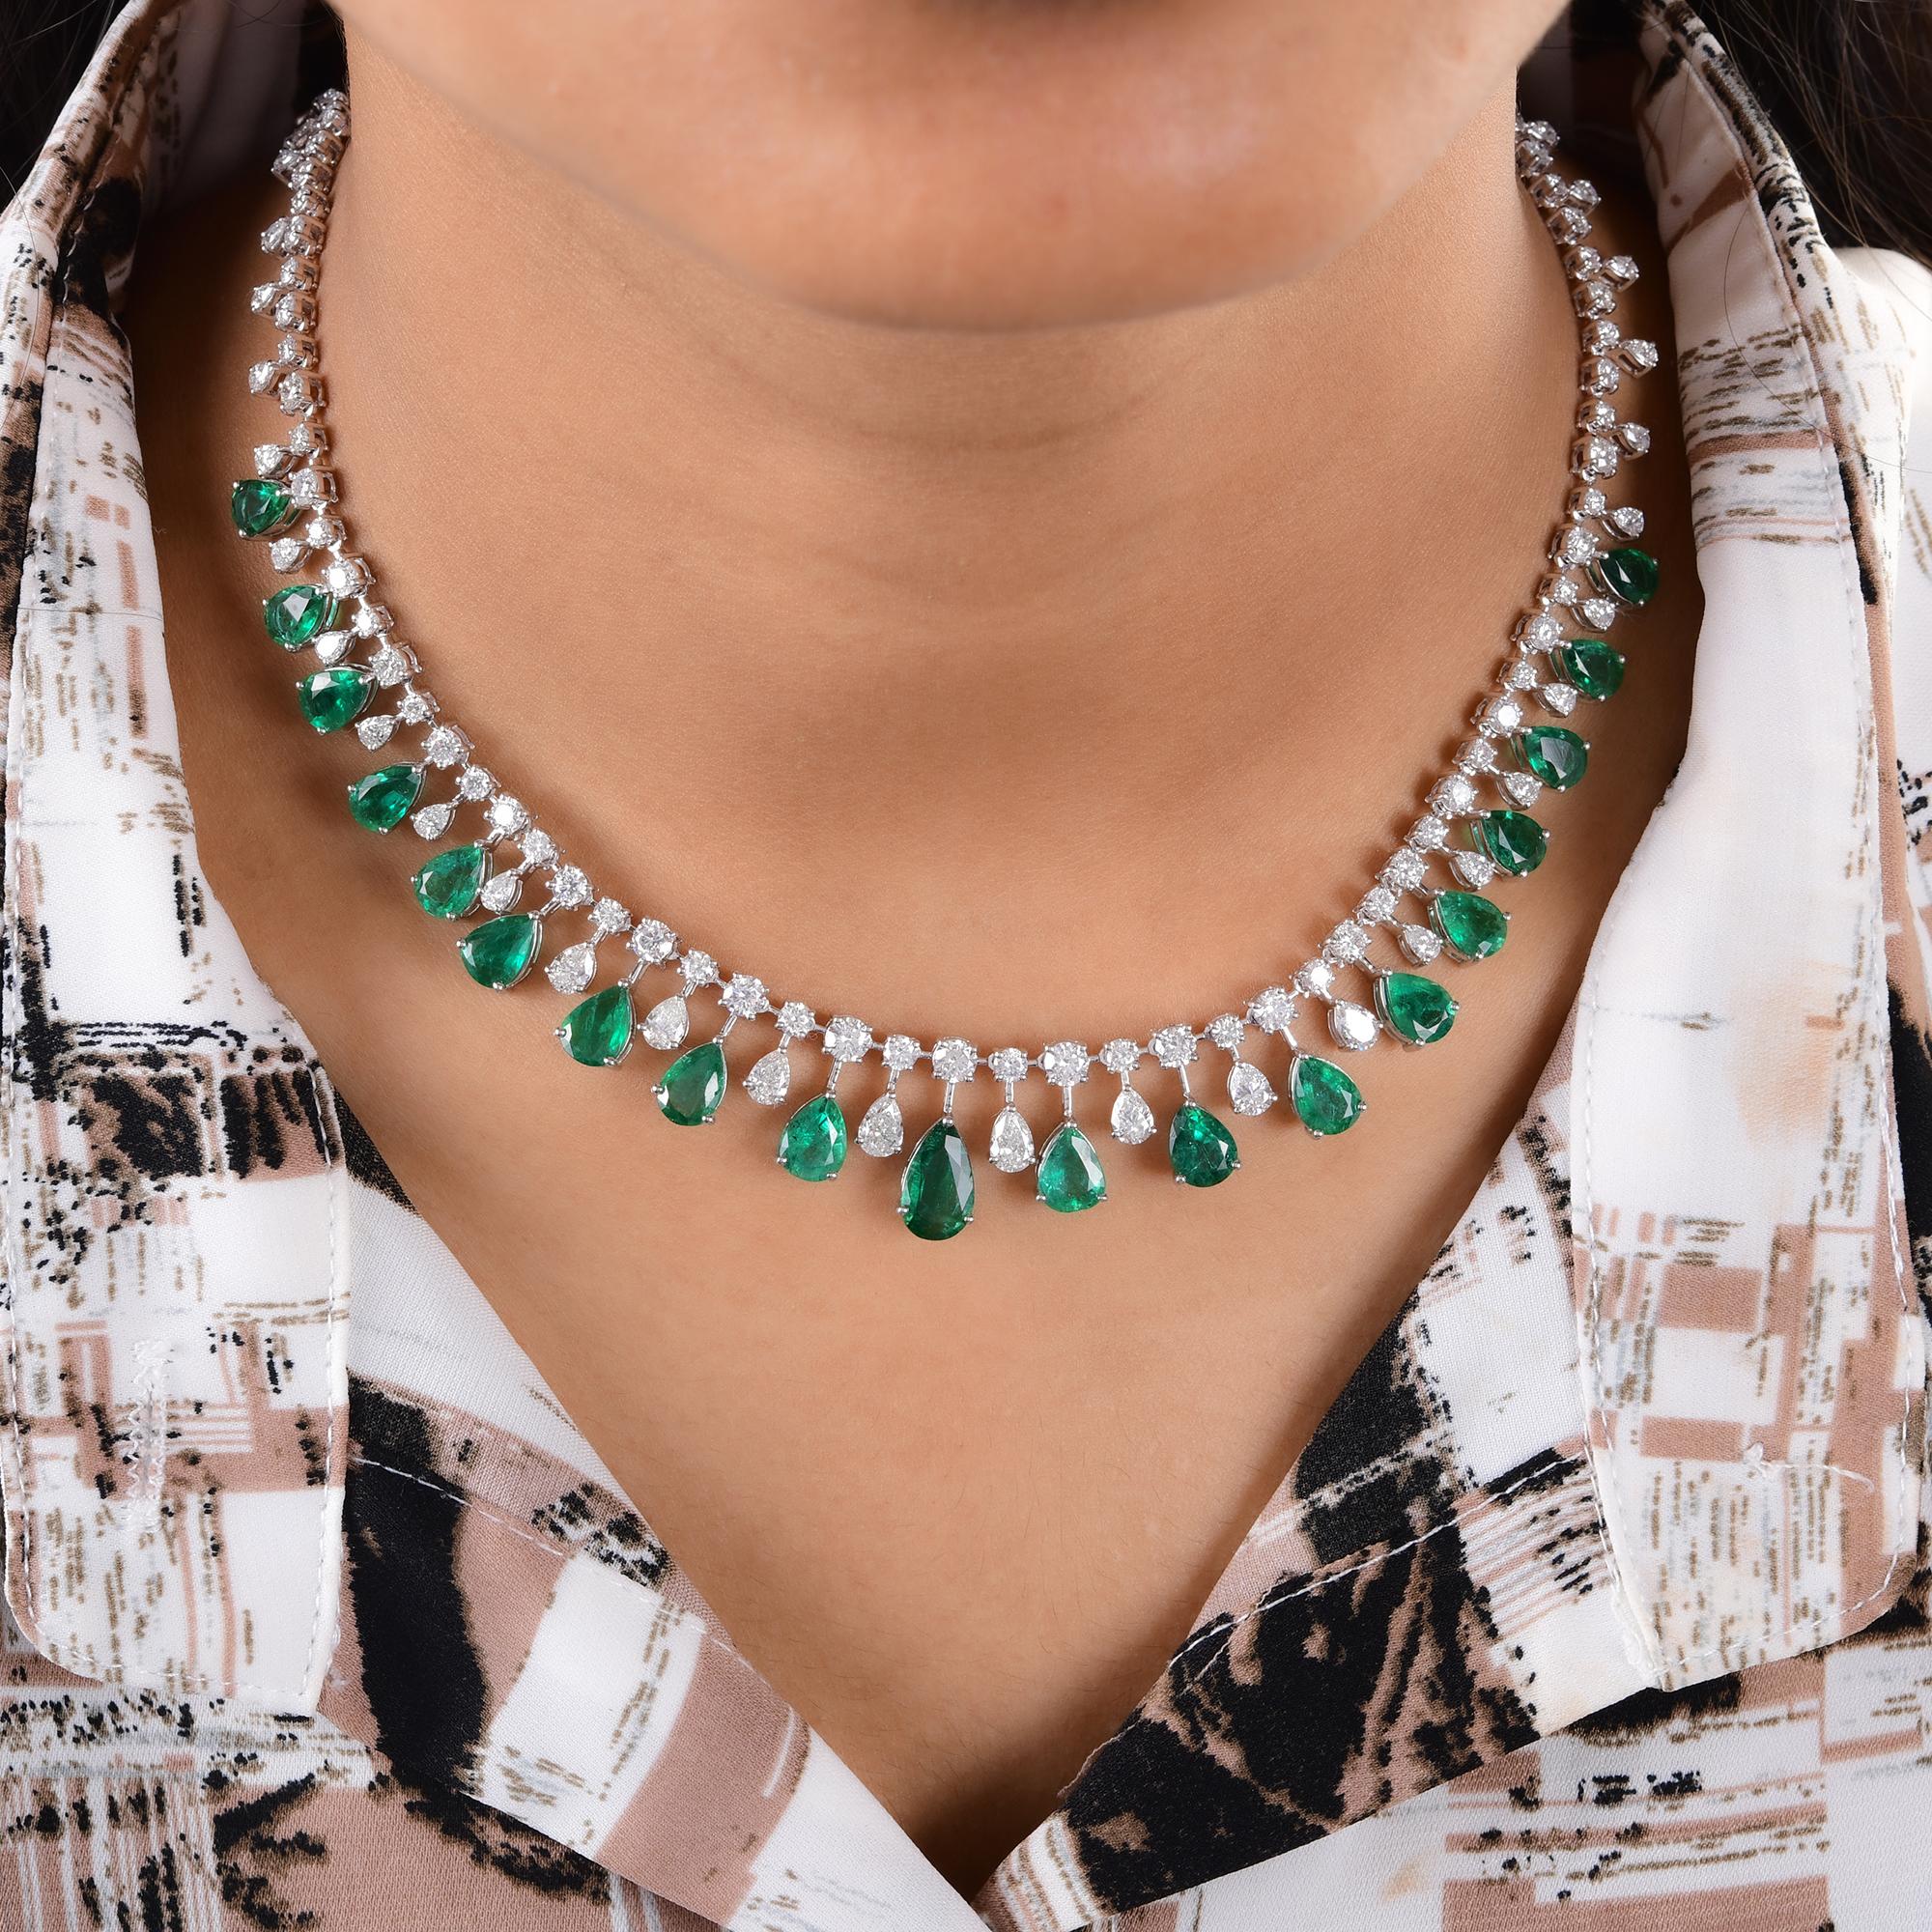 Pear Cut Pear Zambian Emerald Gemstone Necklace Diamond 18 Karat White Gold Fine Jewelry For Sale